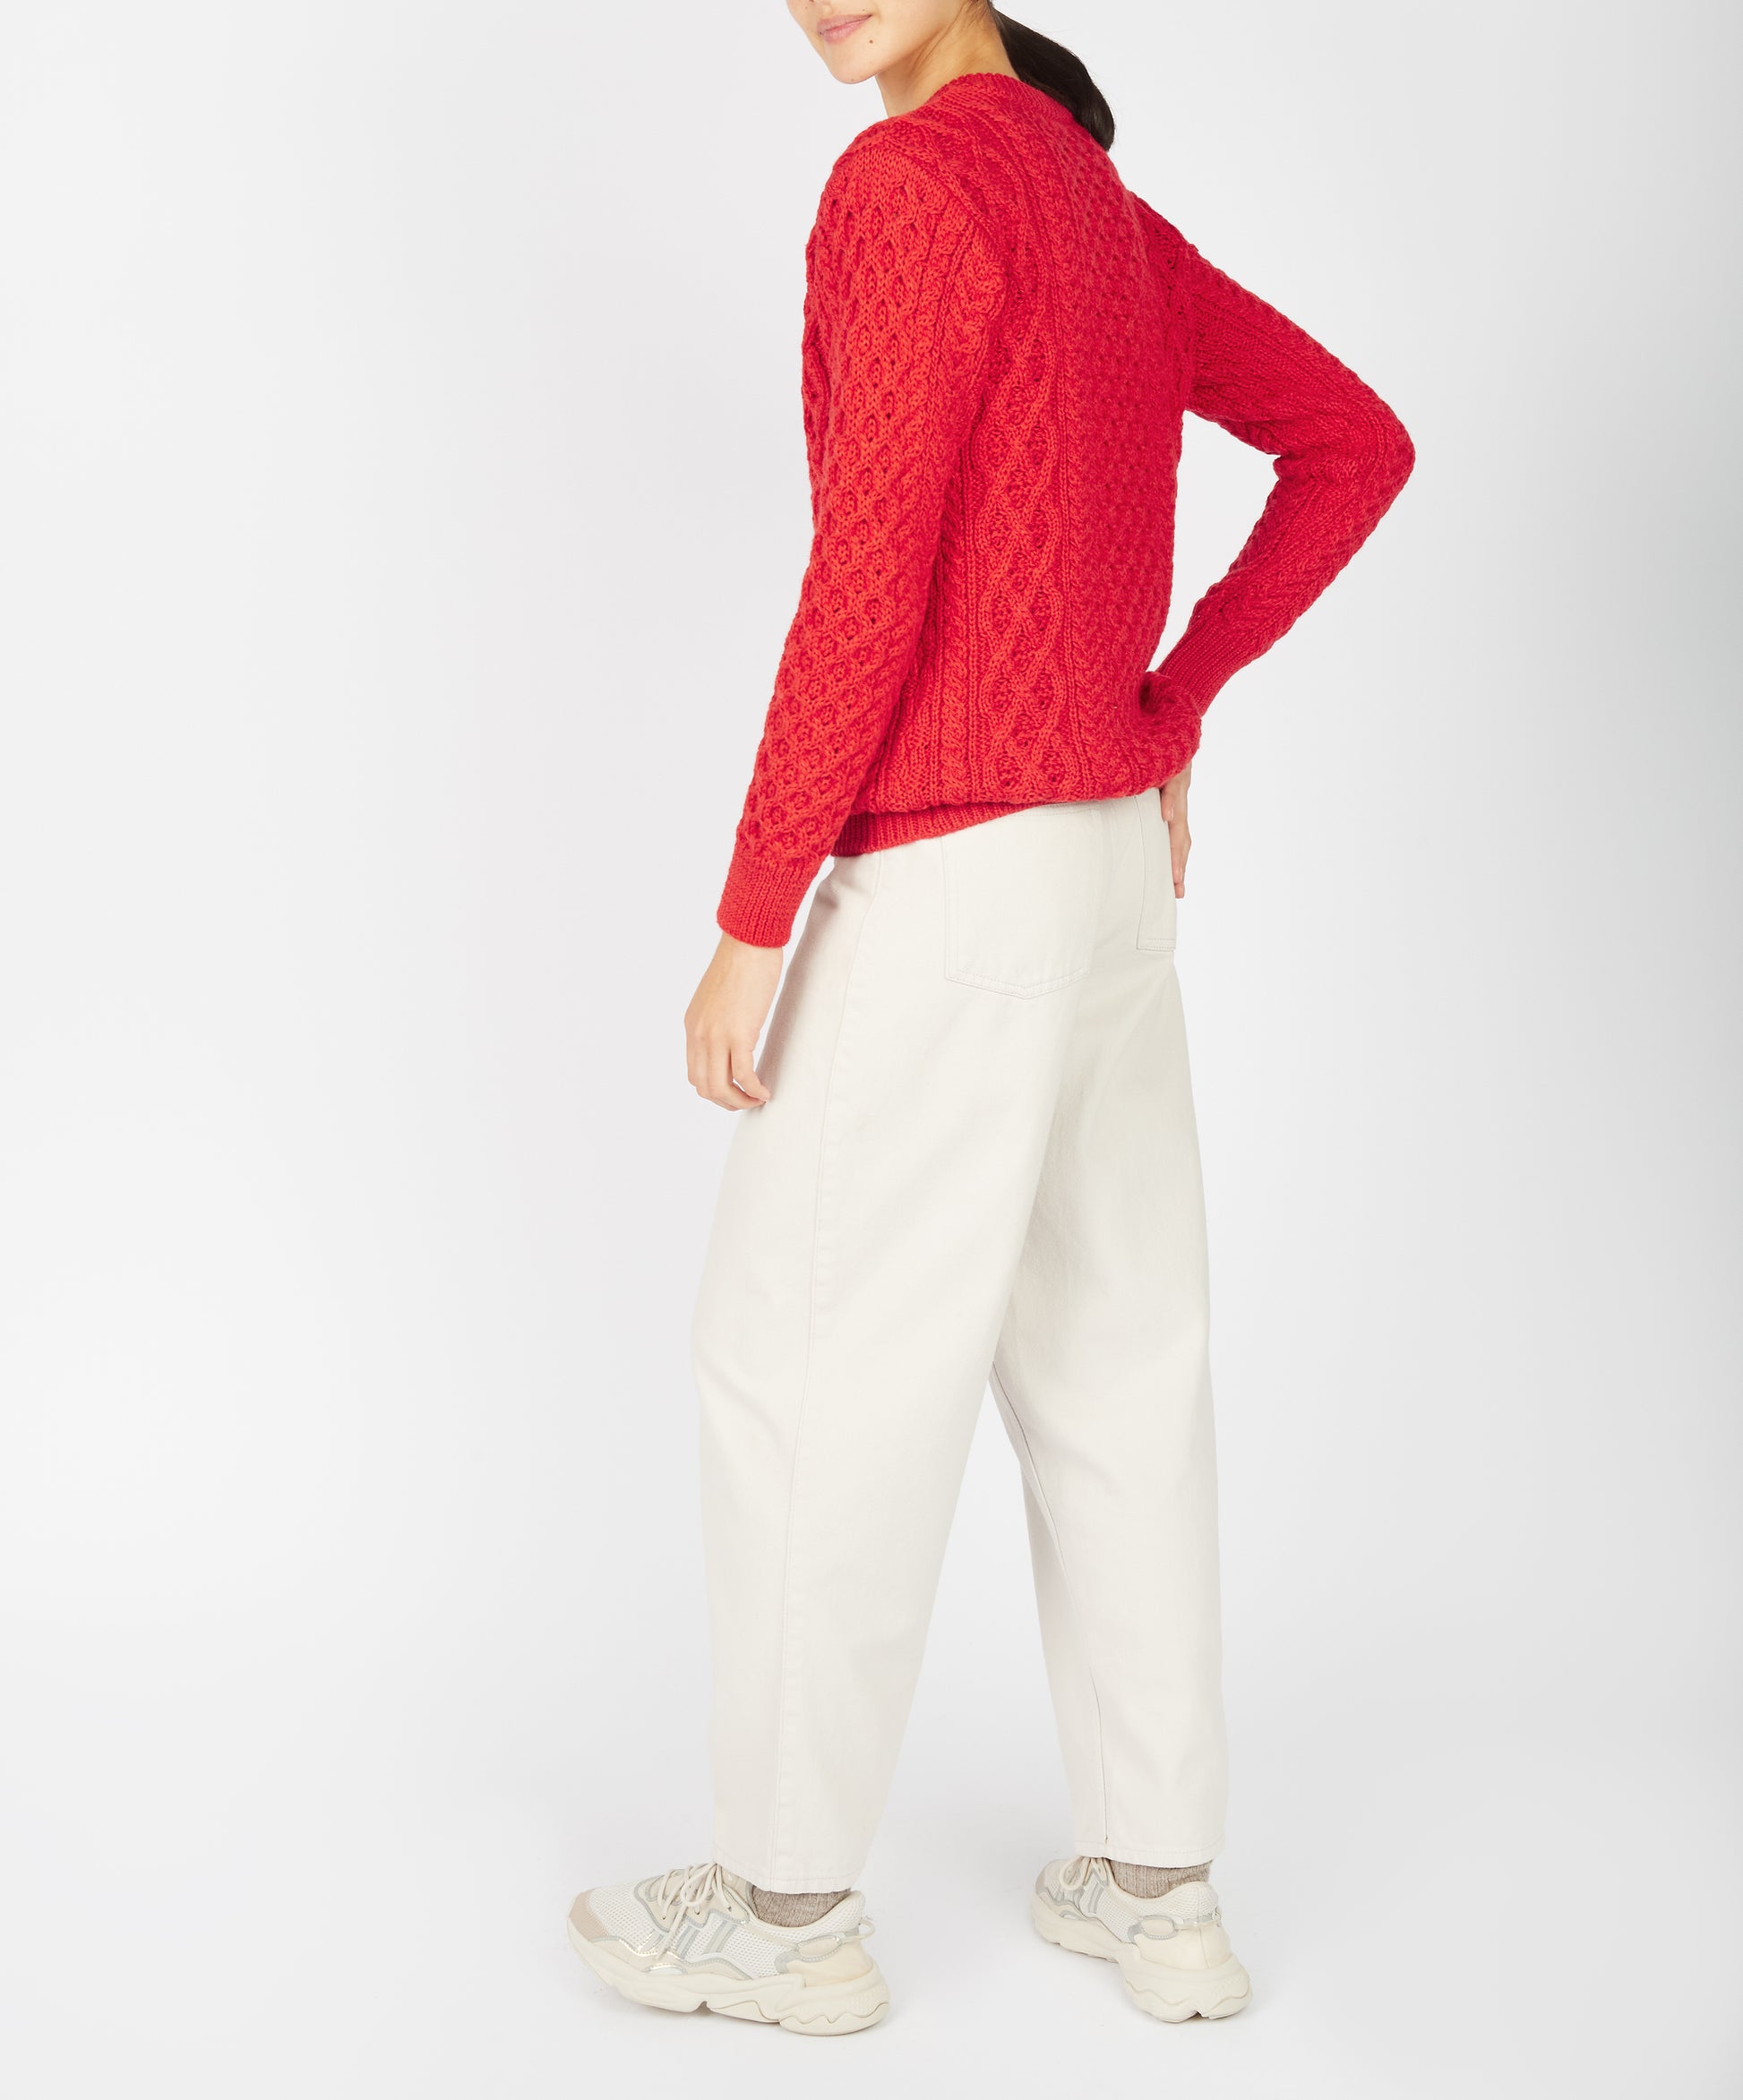 IrelandsEye Knitwear Blasket Honeycomb Stitch Womens Aran Sweater Scarlet